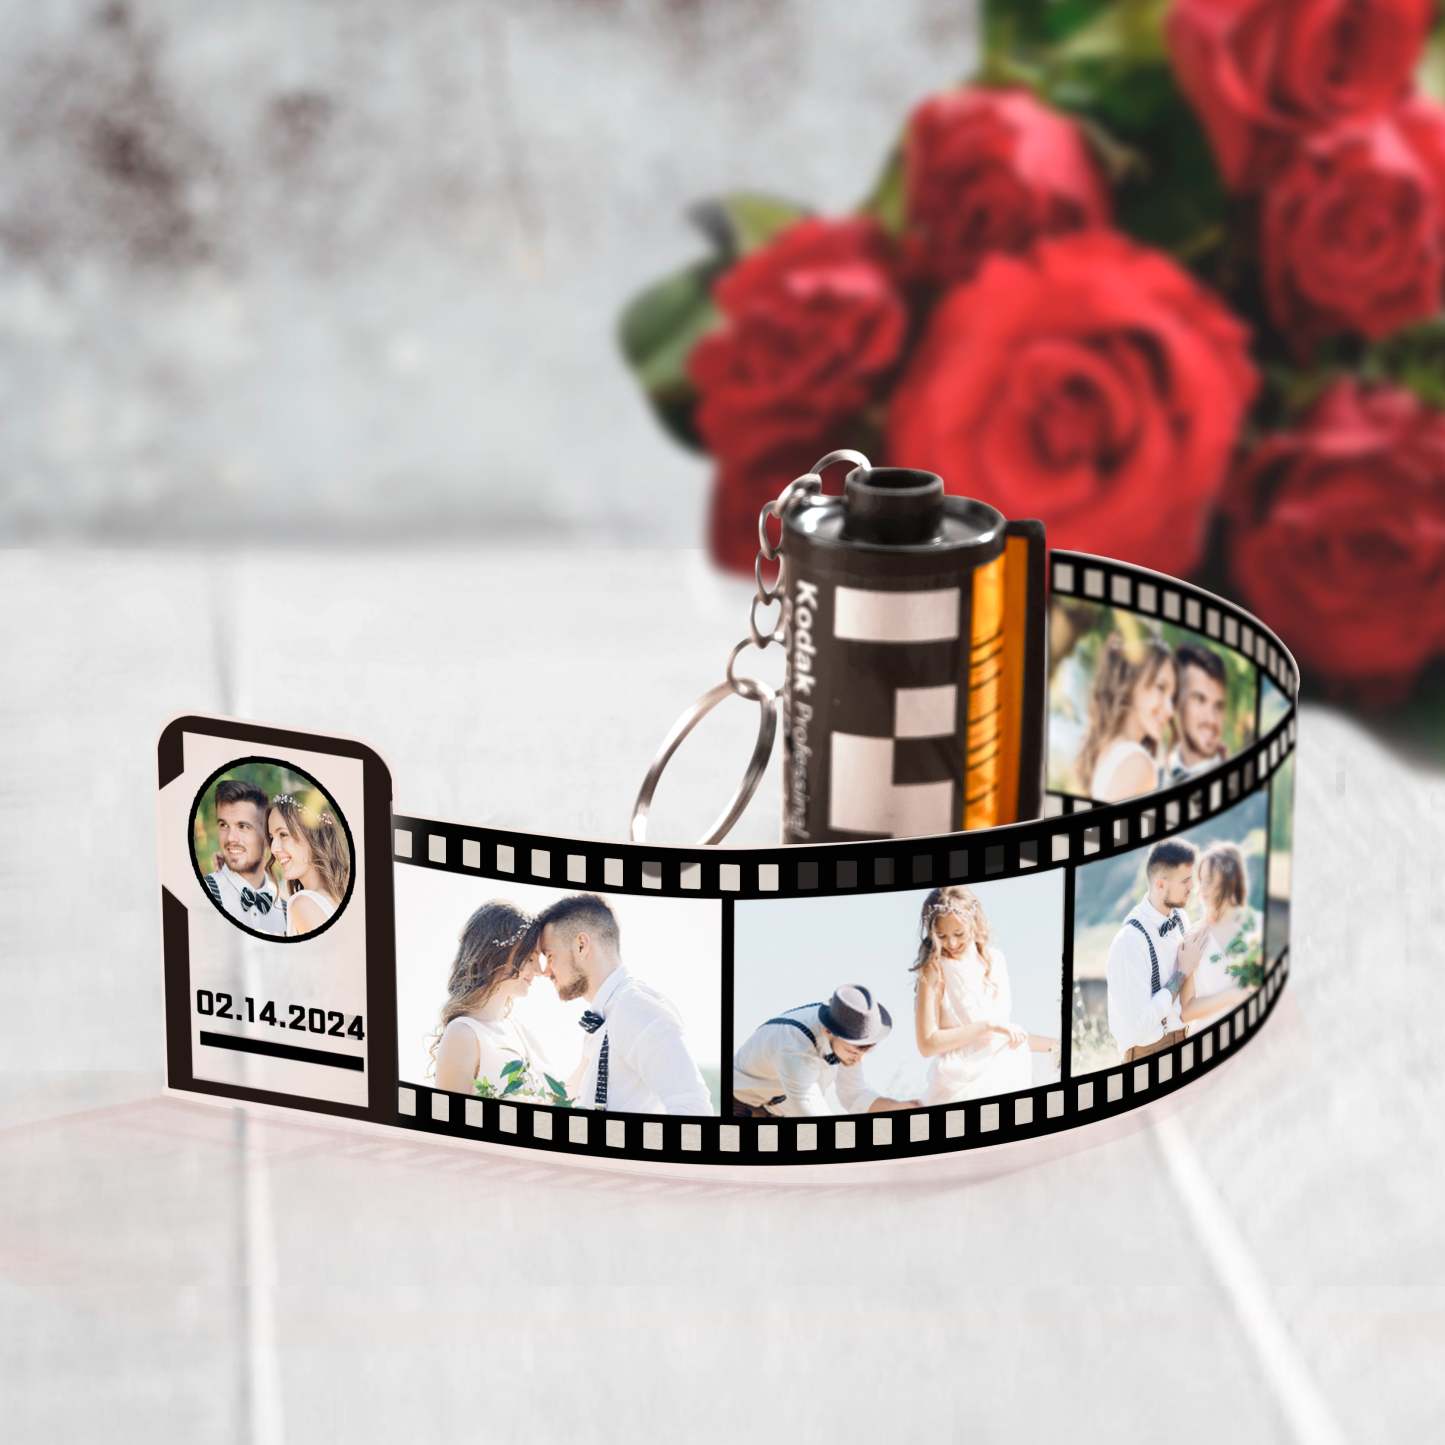 Custom Photo Film Roll Keychain With Text Memory Camera Keychain Valentine's Day Gifts For Couples - MyCameraRollKeychain